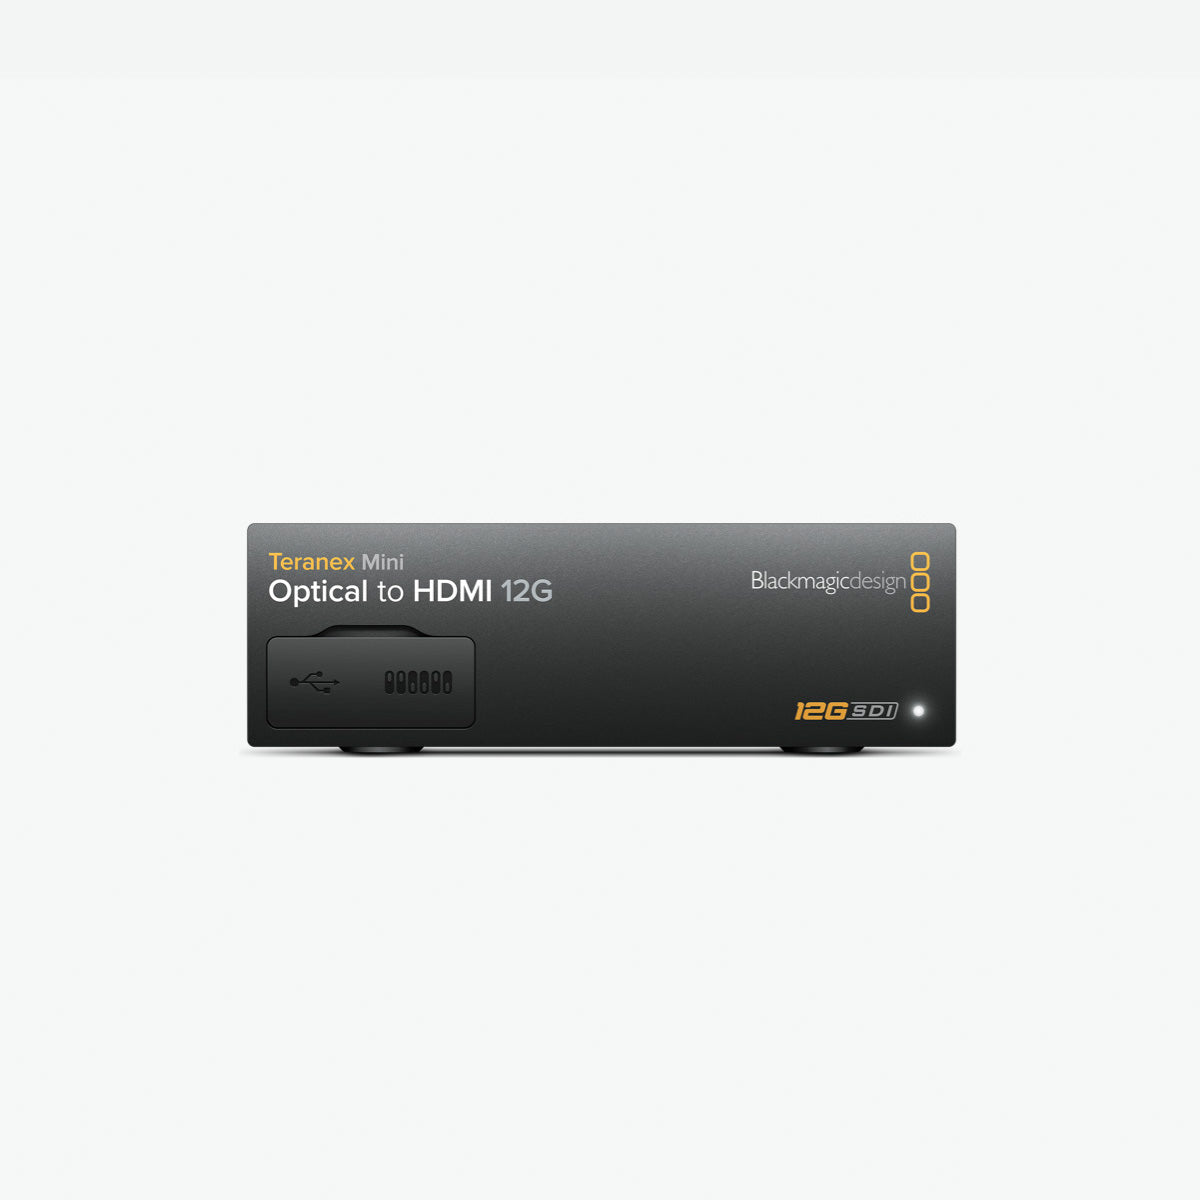 Blackmagic Design(ブラックマジックデザイン) Teranex Mini - Optical to HDMI 12G CONVNTRM/MA/OPTH